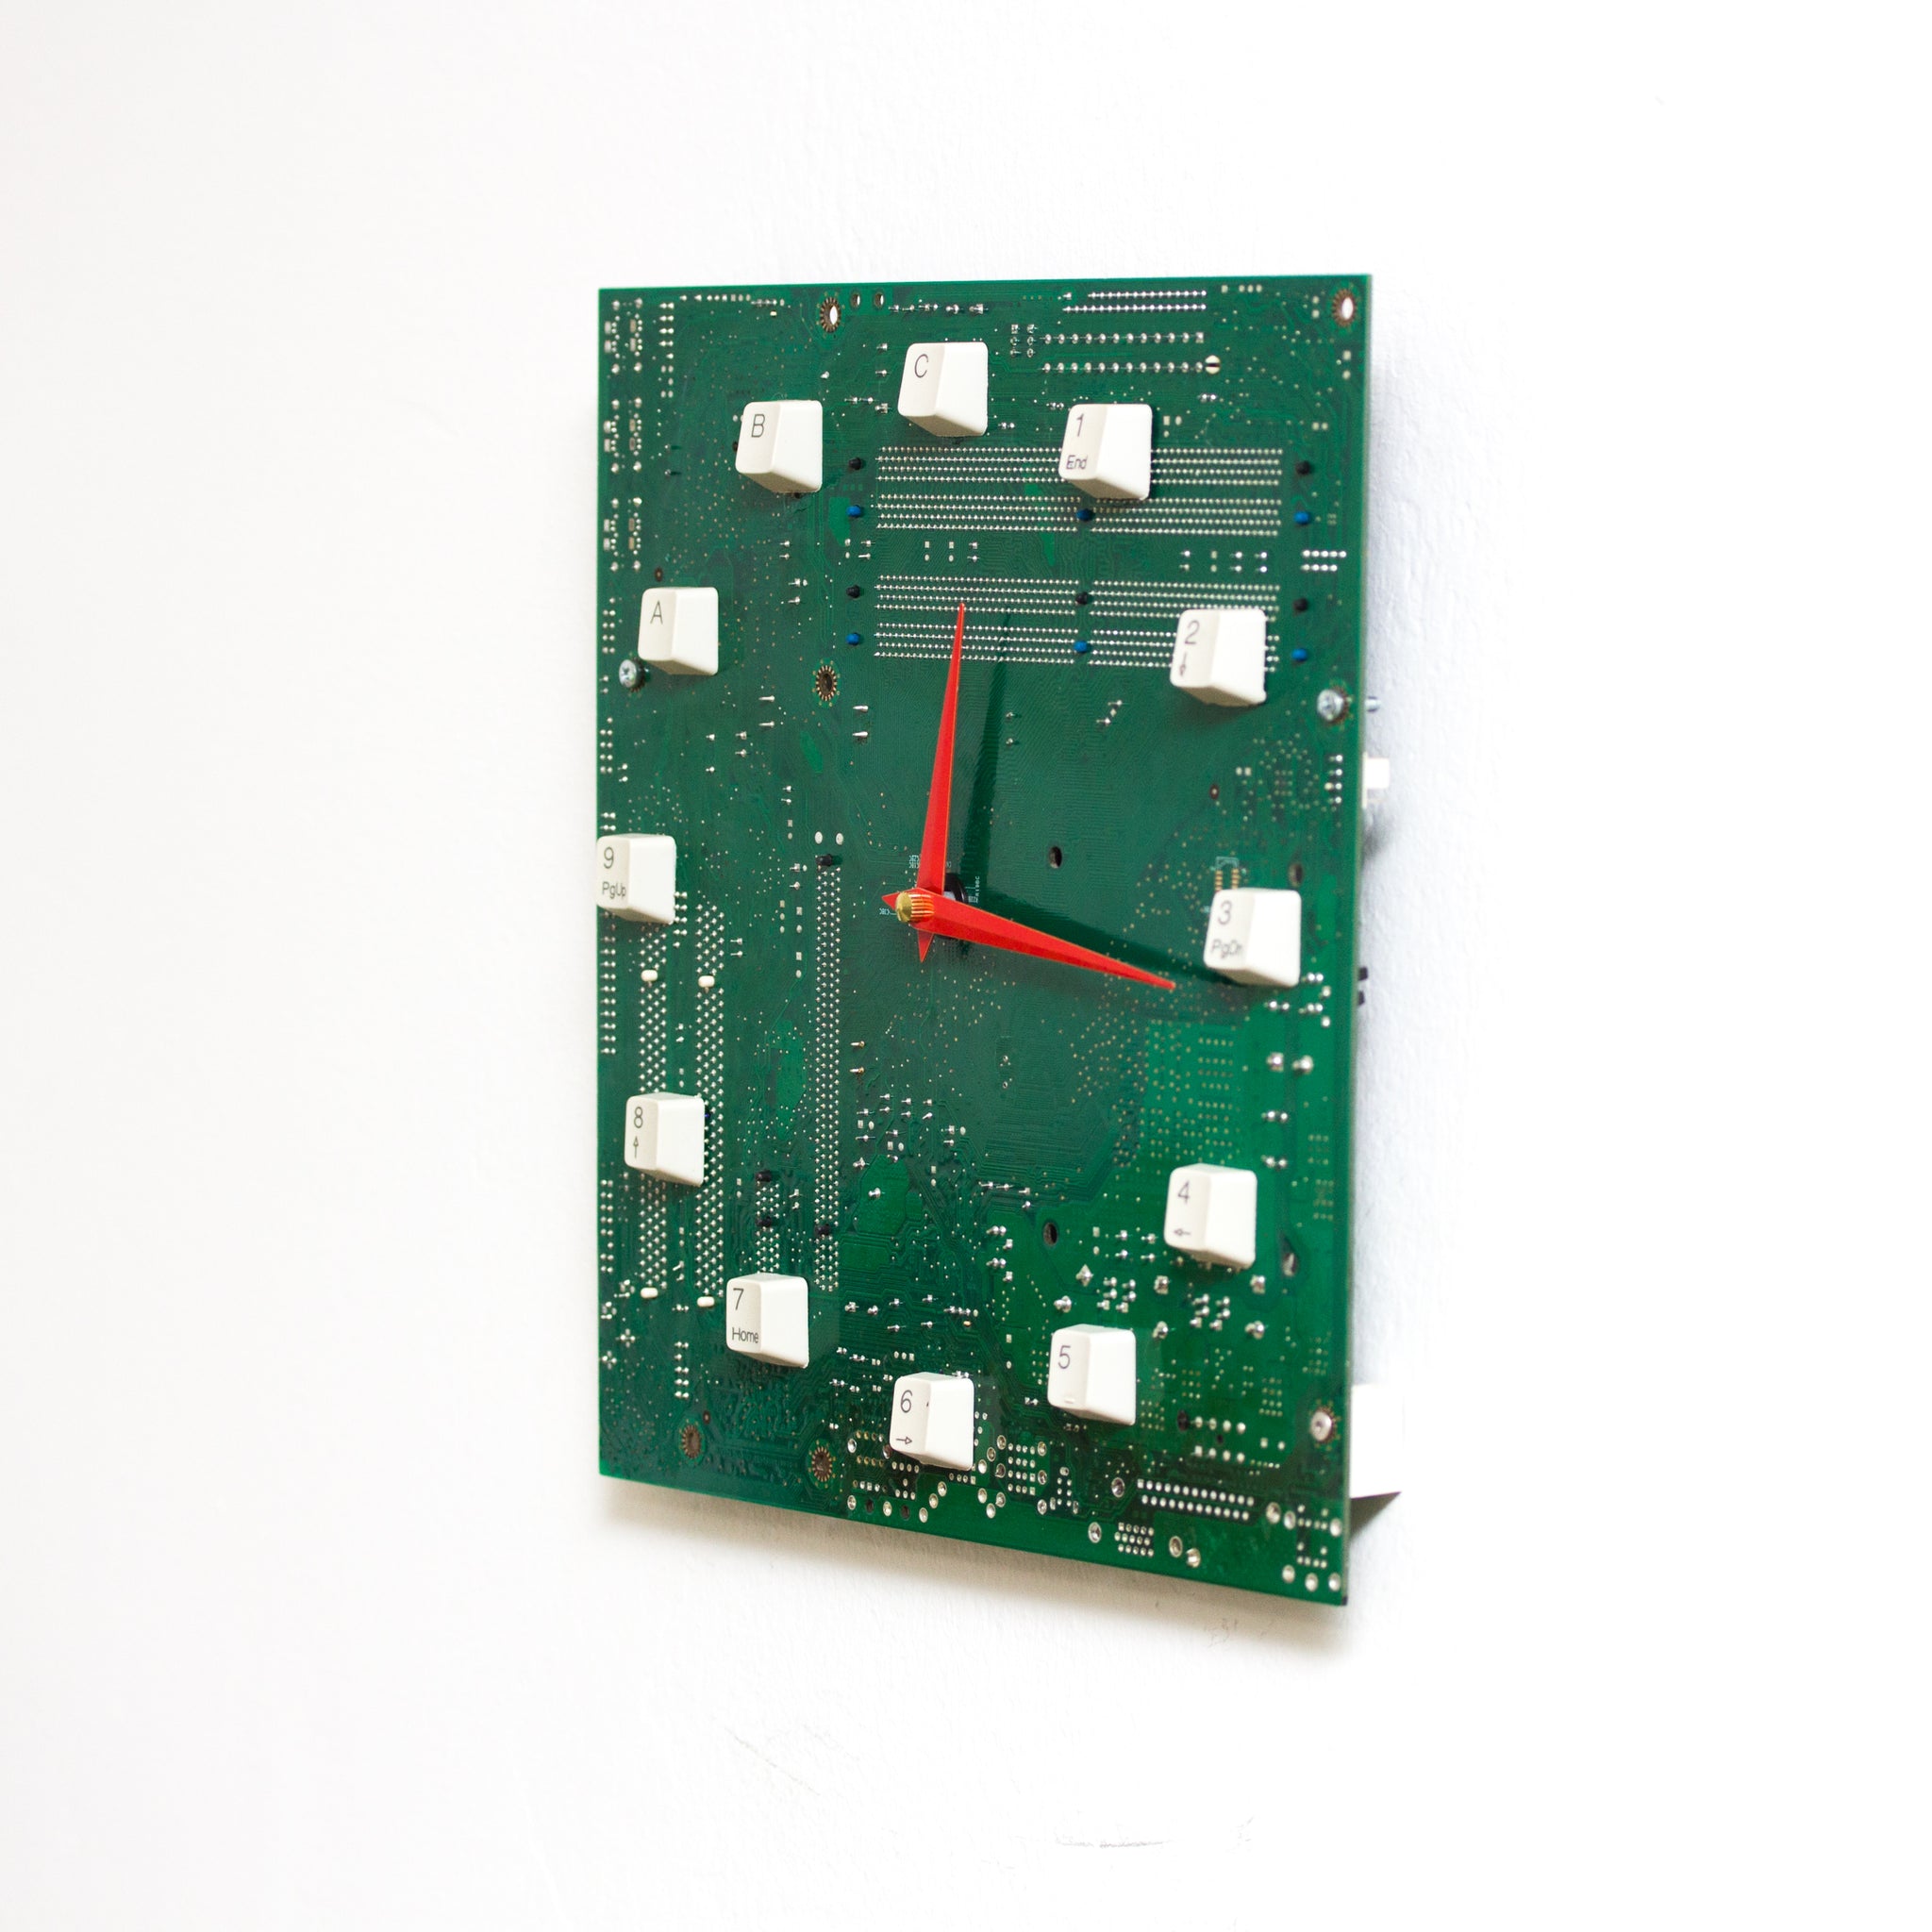 Wall Clock made of green motherboard